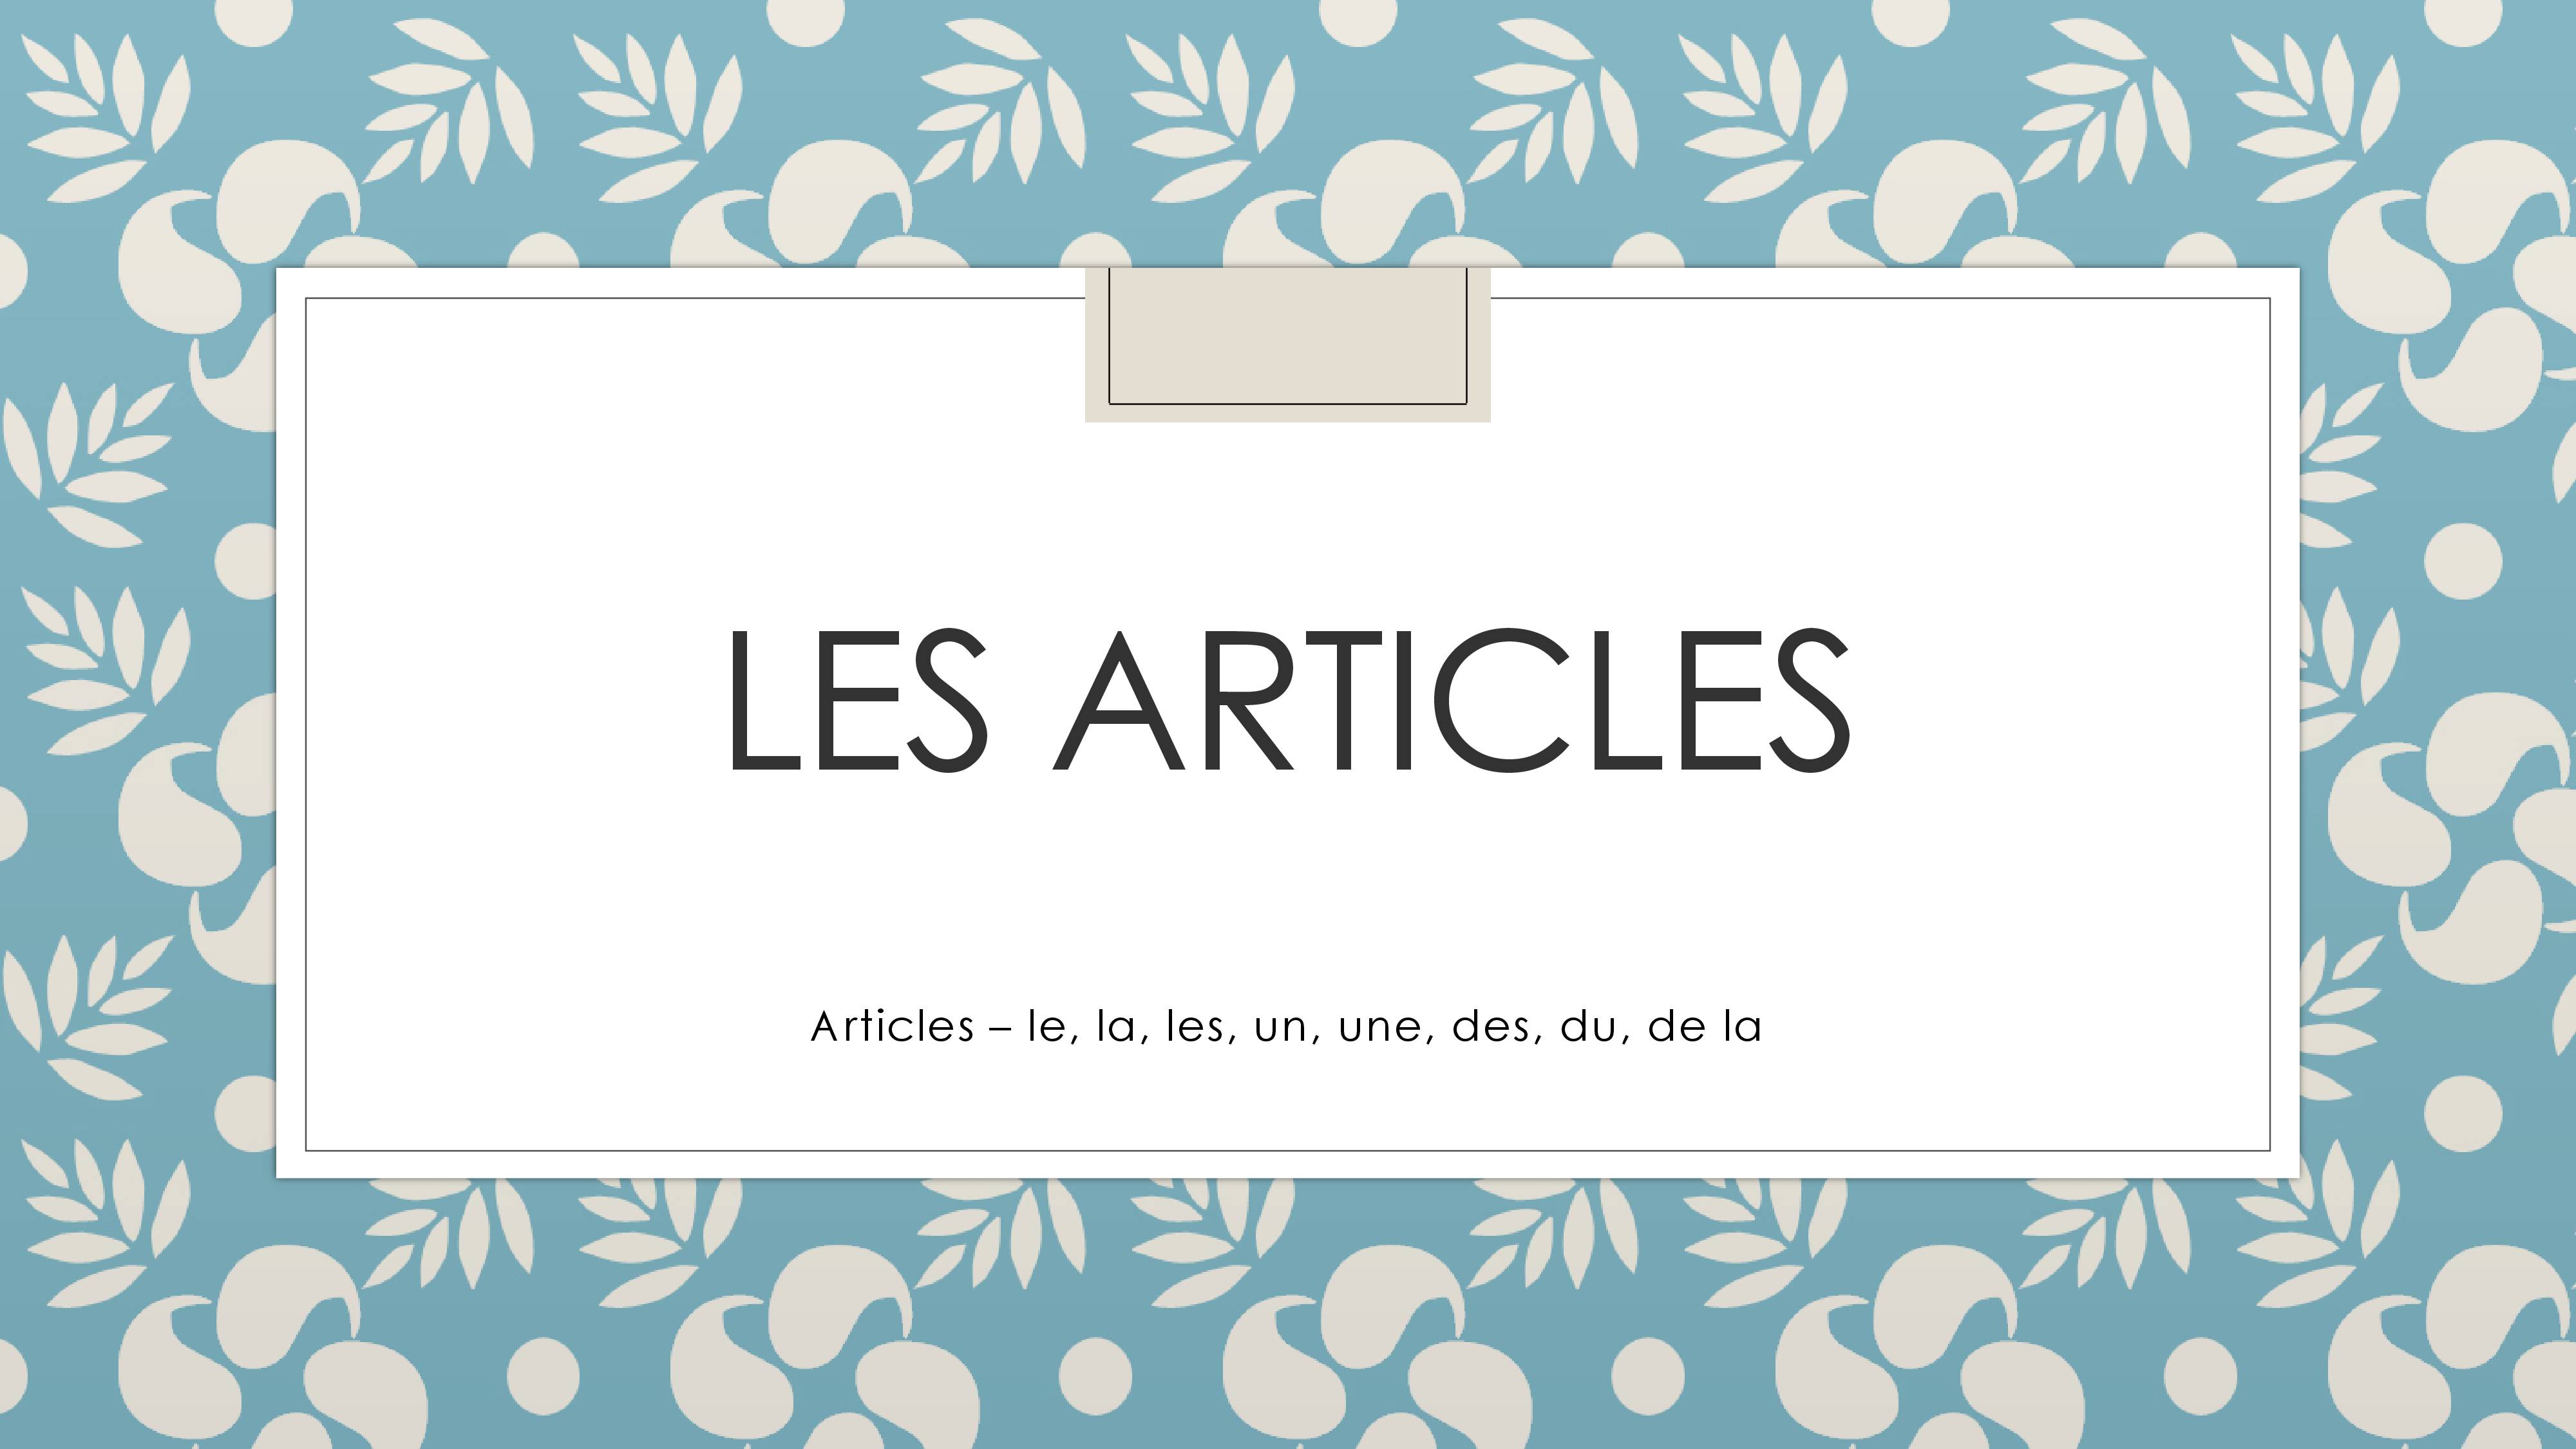 Presentation on Les articles